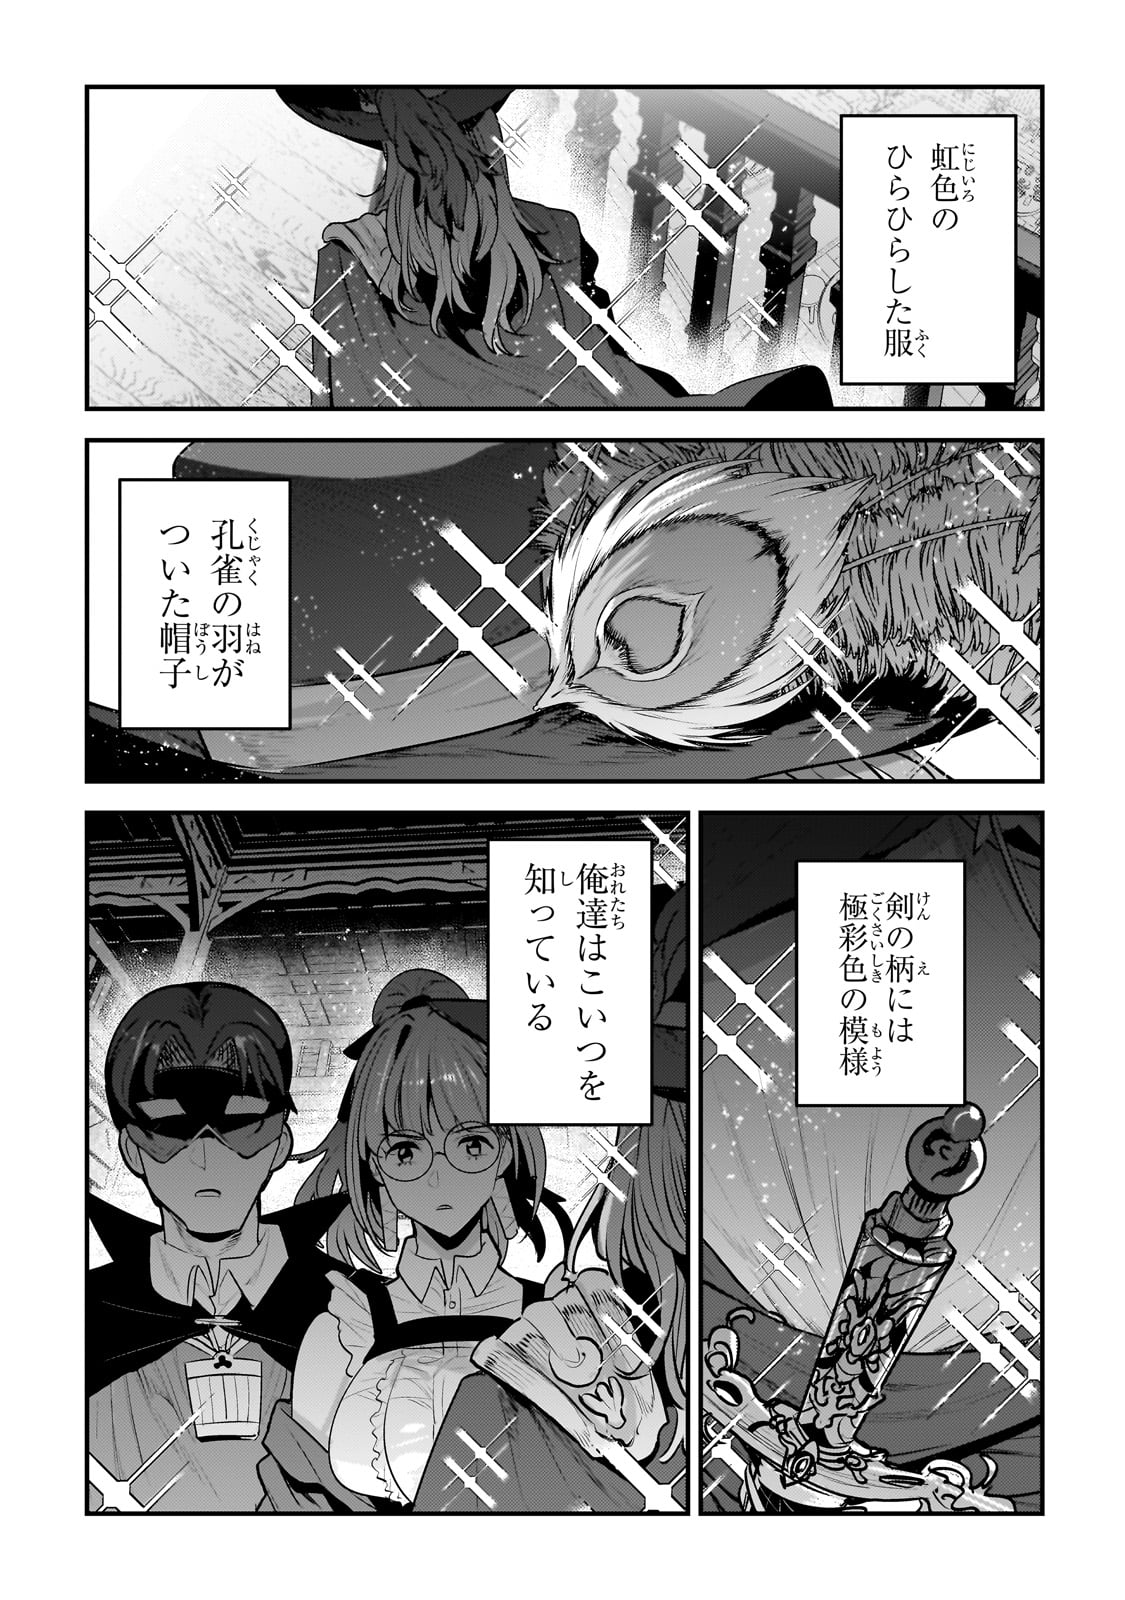 Nozomanu Fushi no Boukensha - Chapter 60 - Page 1